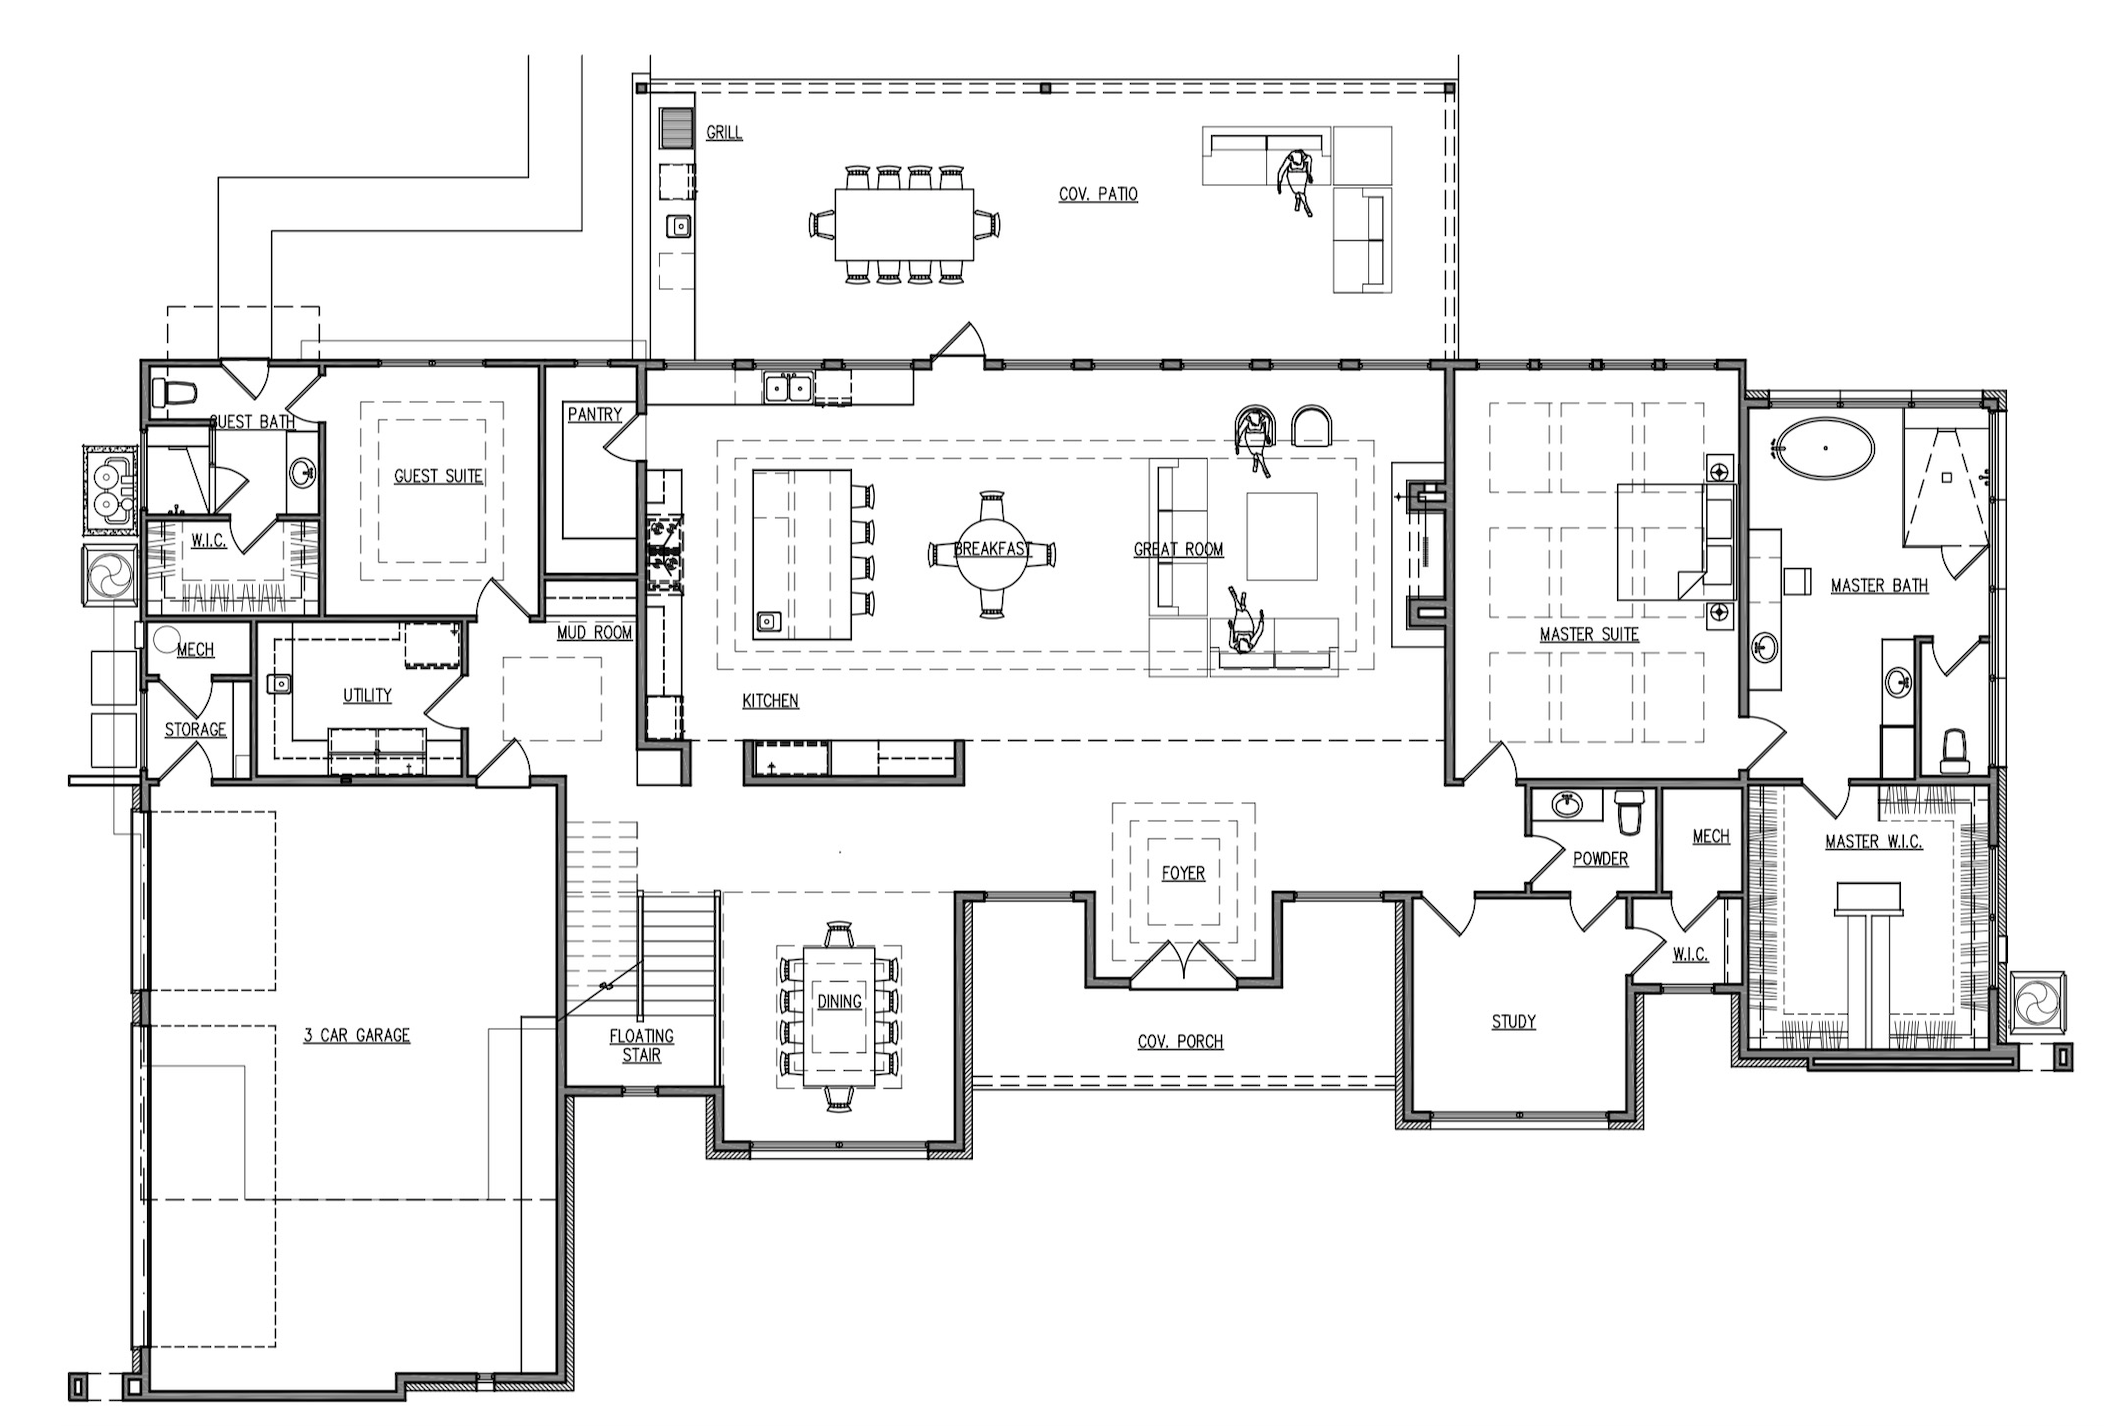 Lifestyle by stadler floor plan